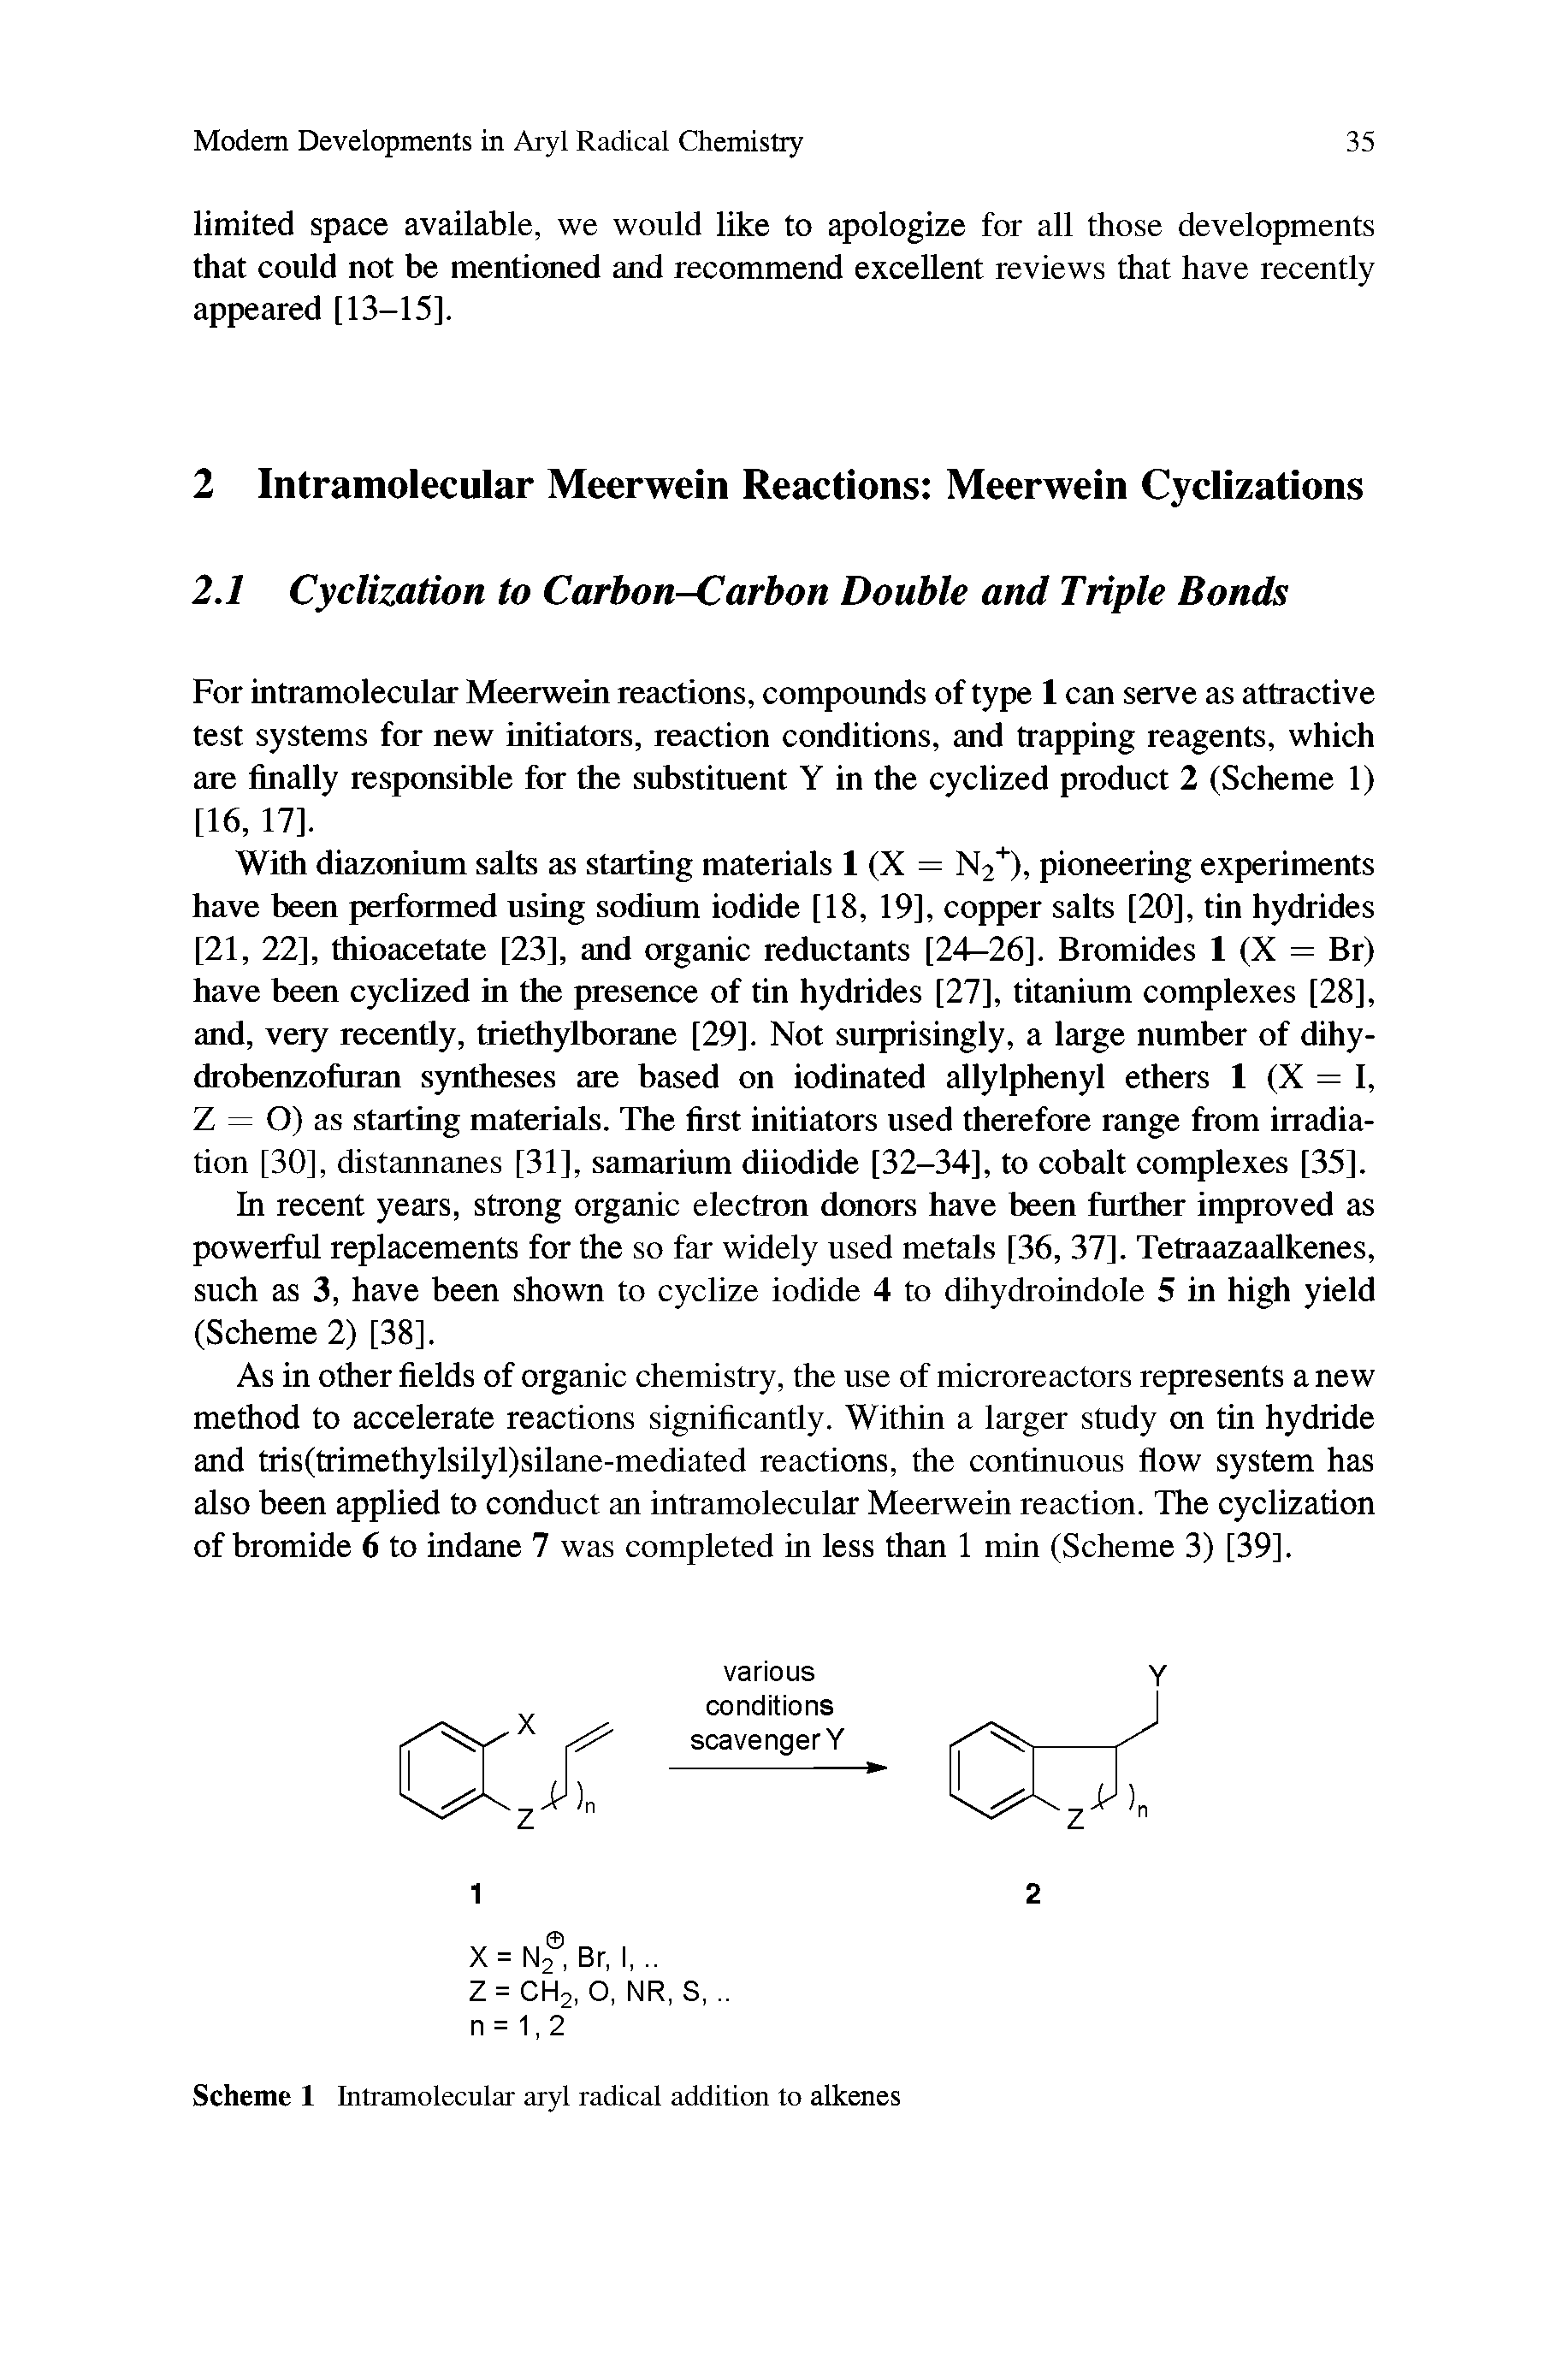 Scheme 1 Intramolecular aryl radical addition to alkenes...